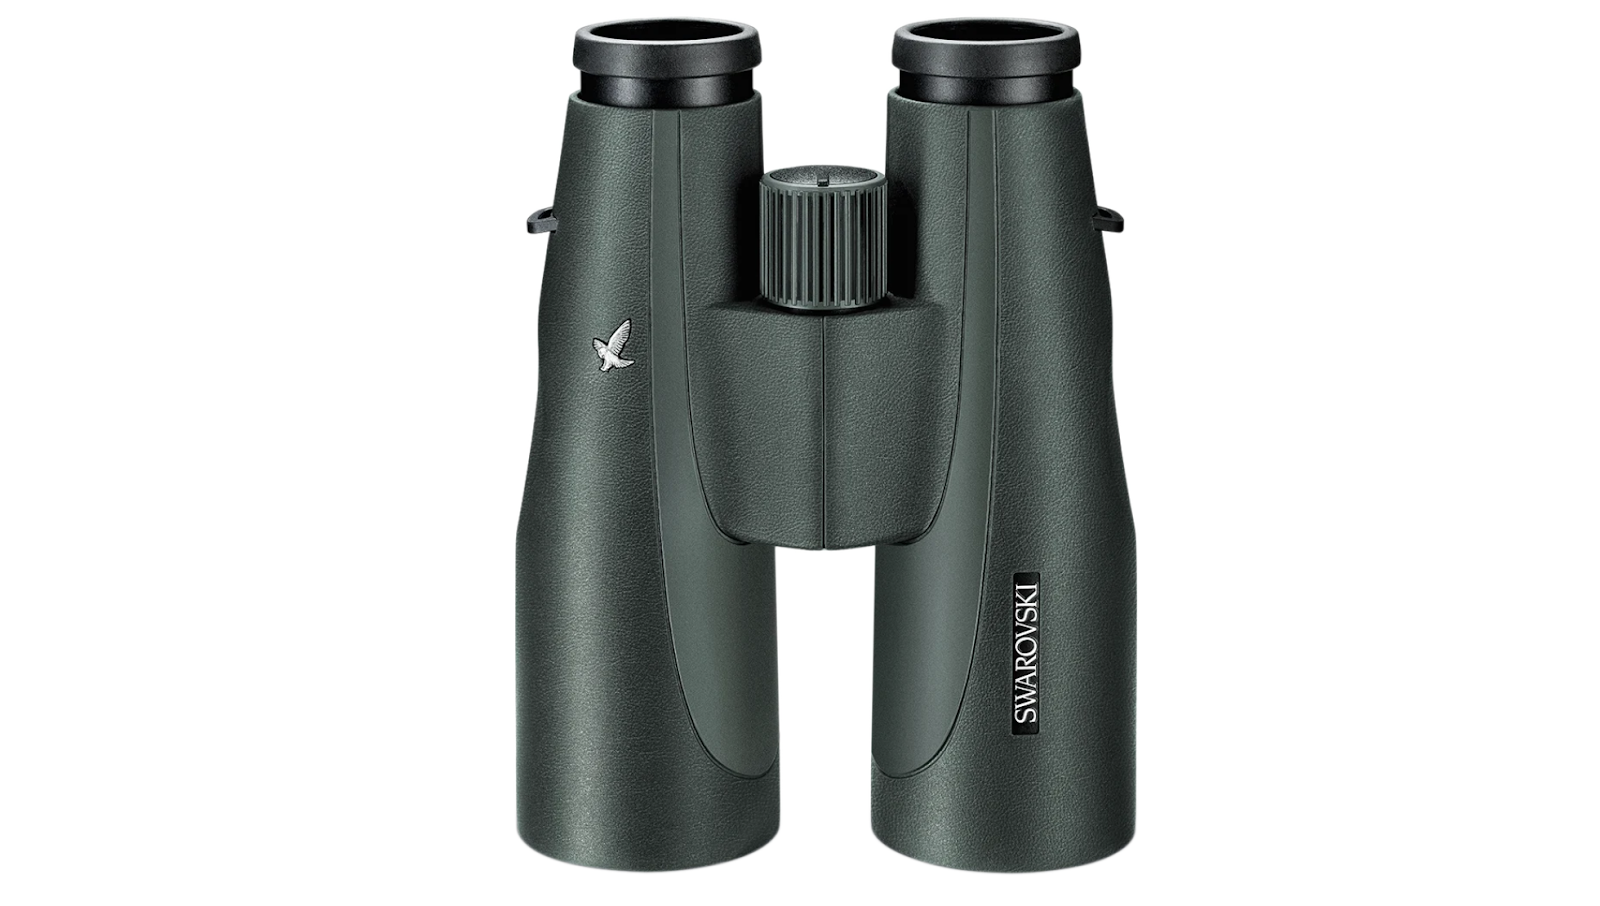 Black Swarovski slc binoculars for hunting or birdwatching